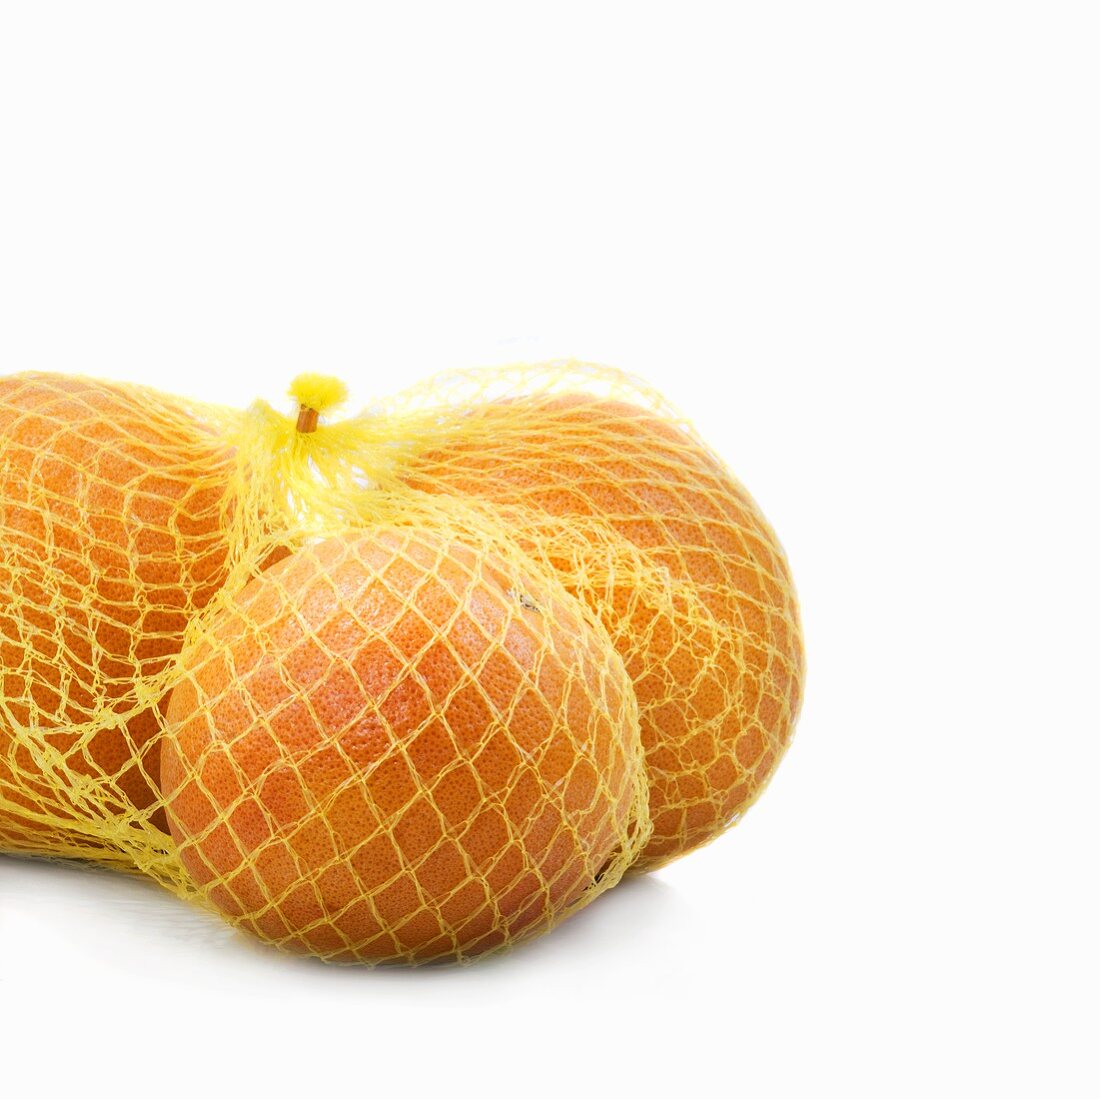 Three grapefruits in a net